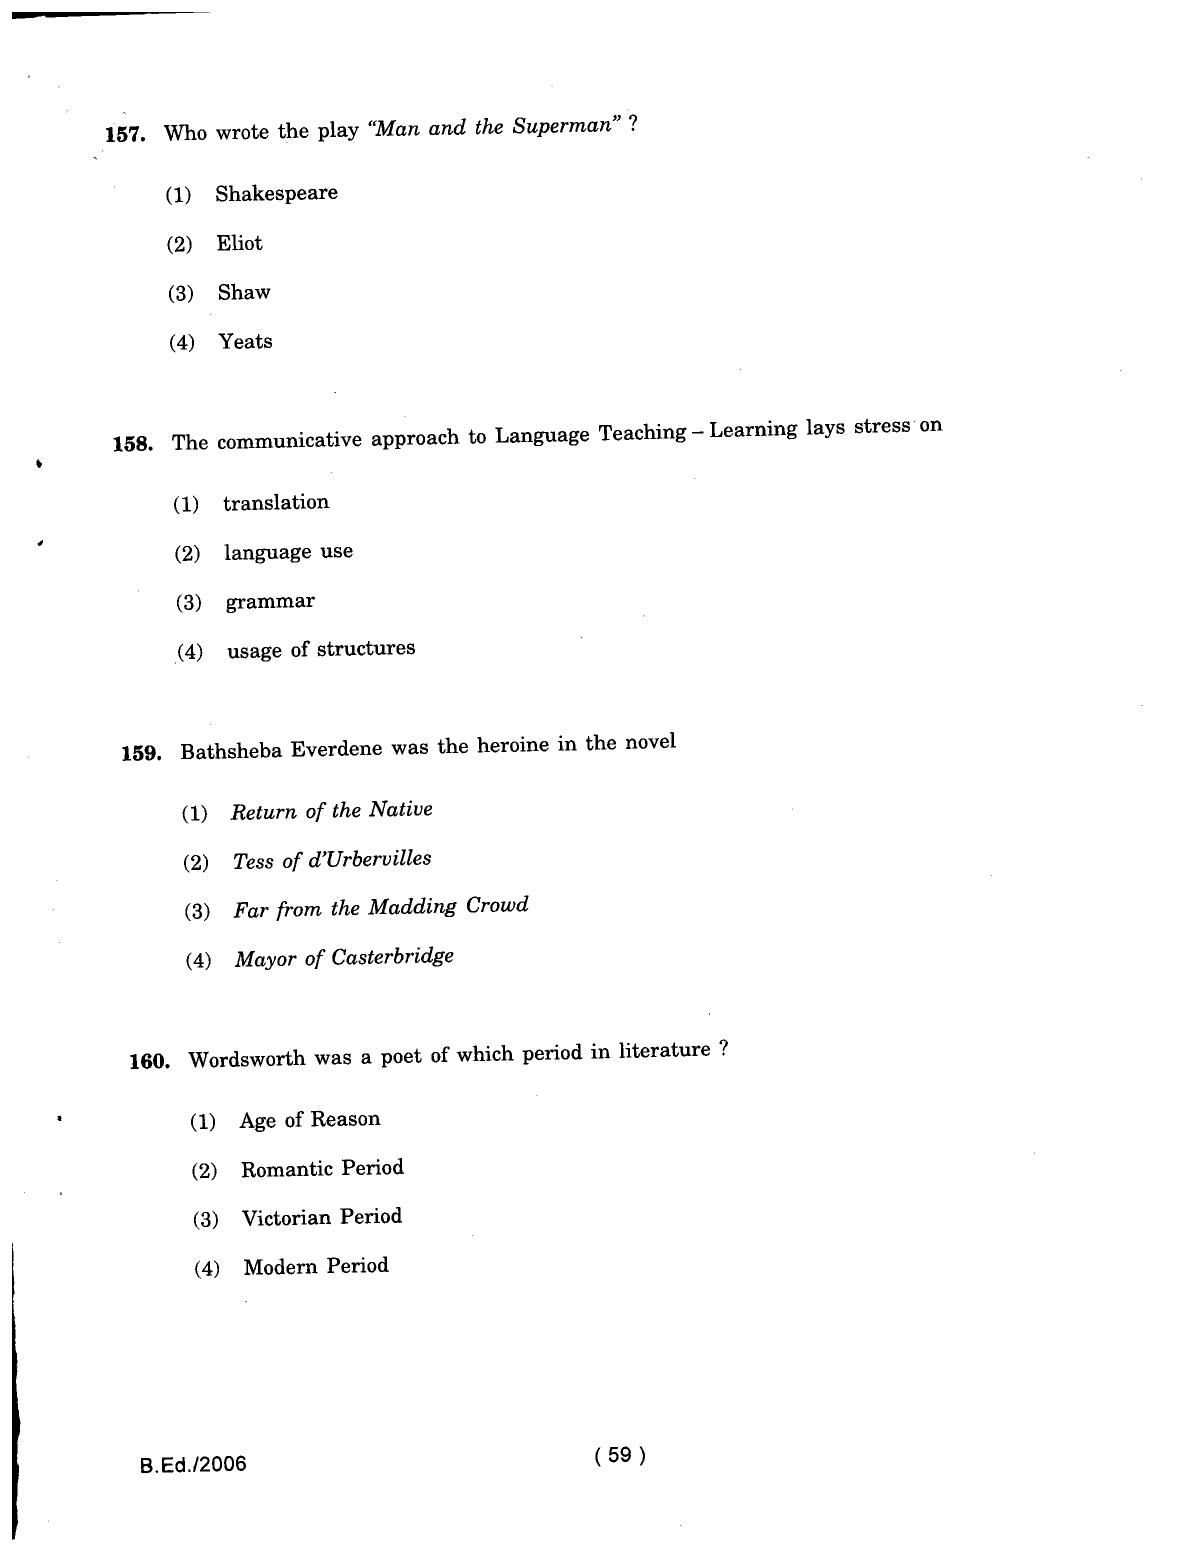 IGNOU B.Ed 2006 Question Paper - Page 59